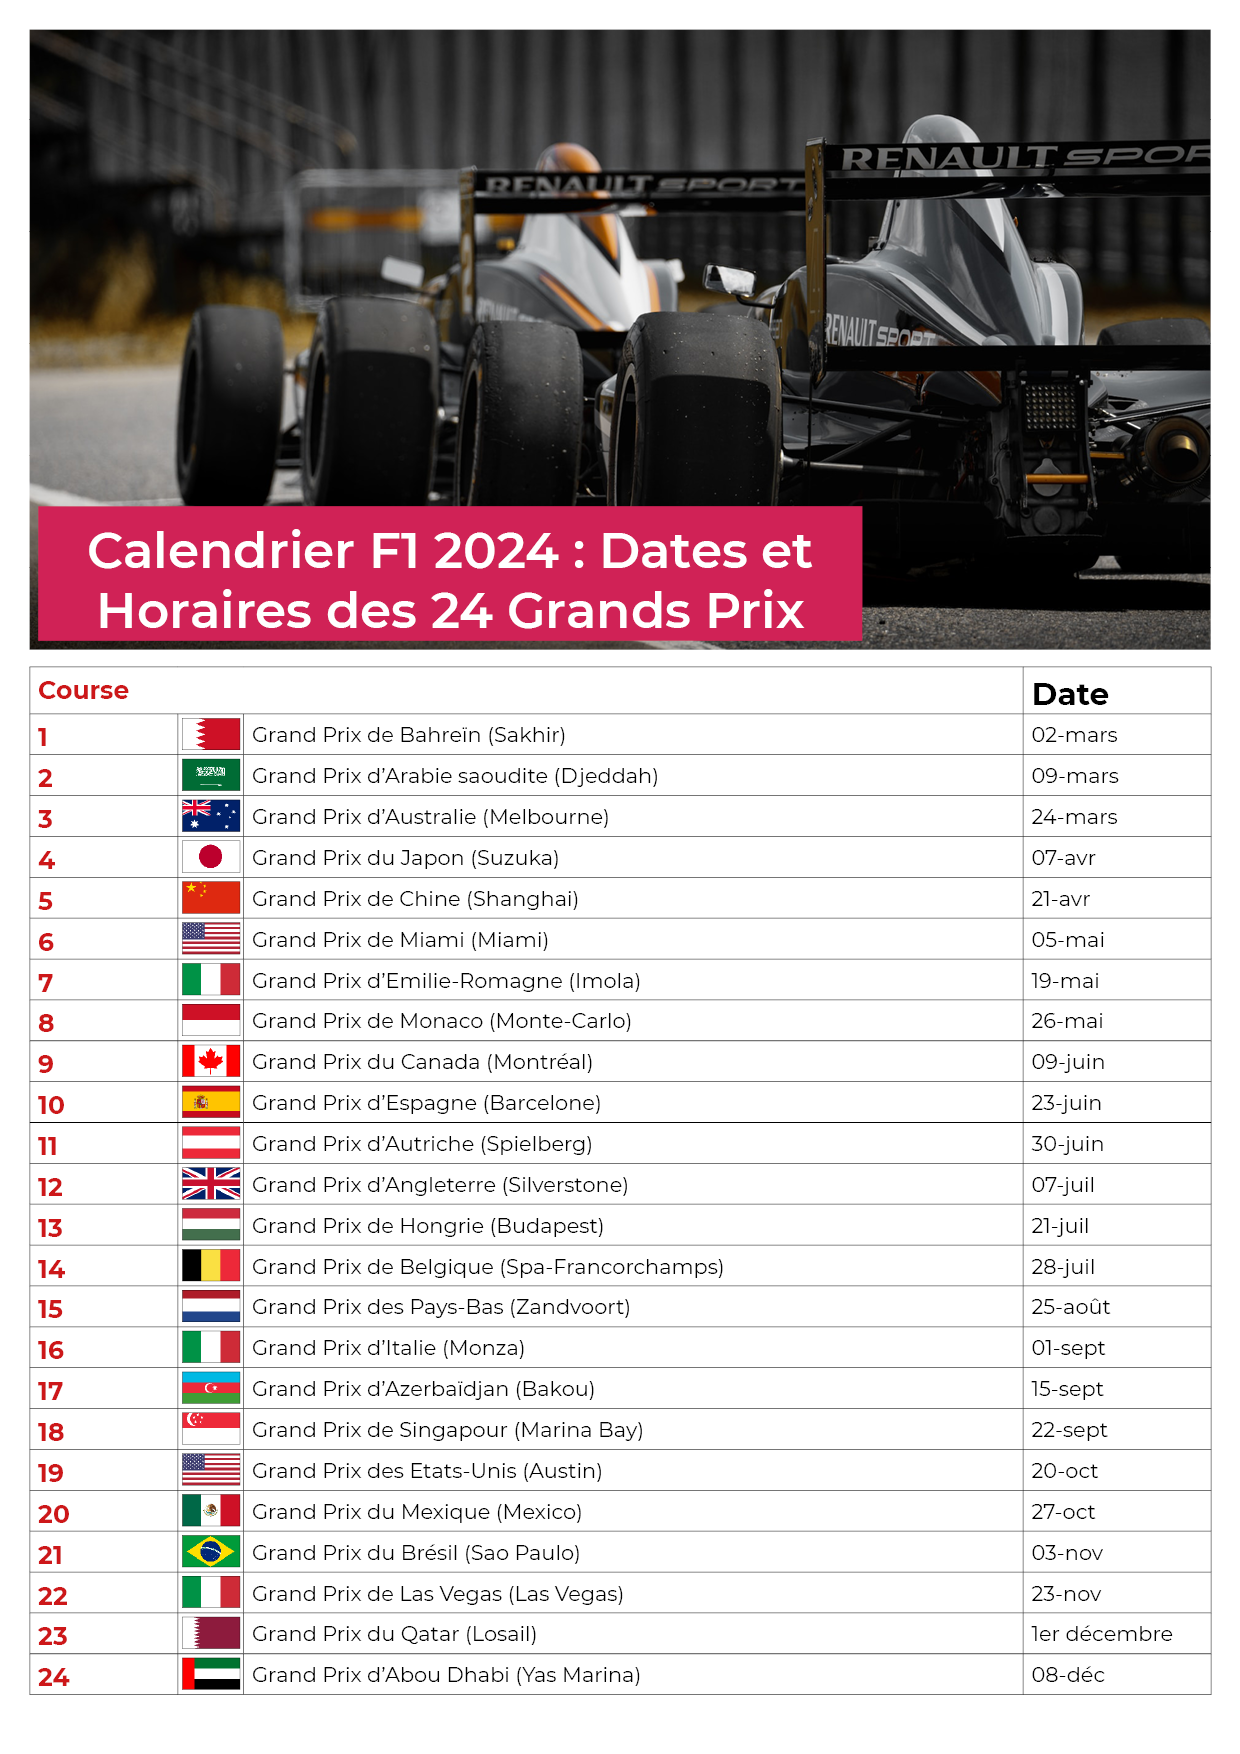 CALENDRIER F1 2024 : DATES 24 GRANDS PRIX